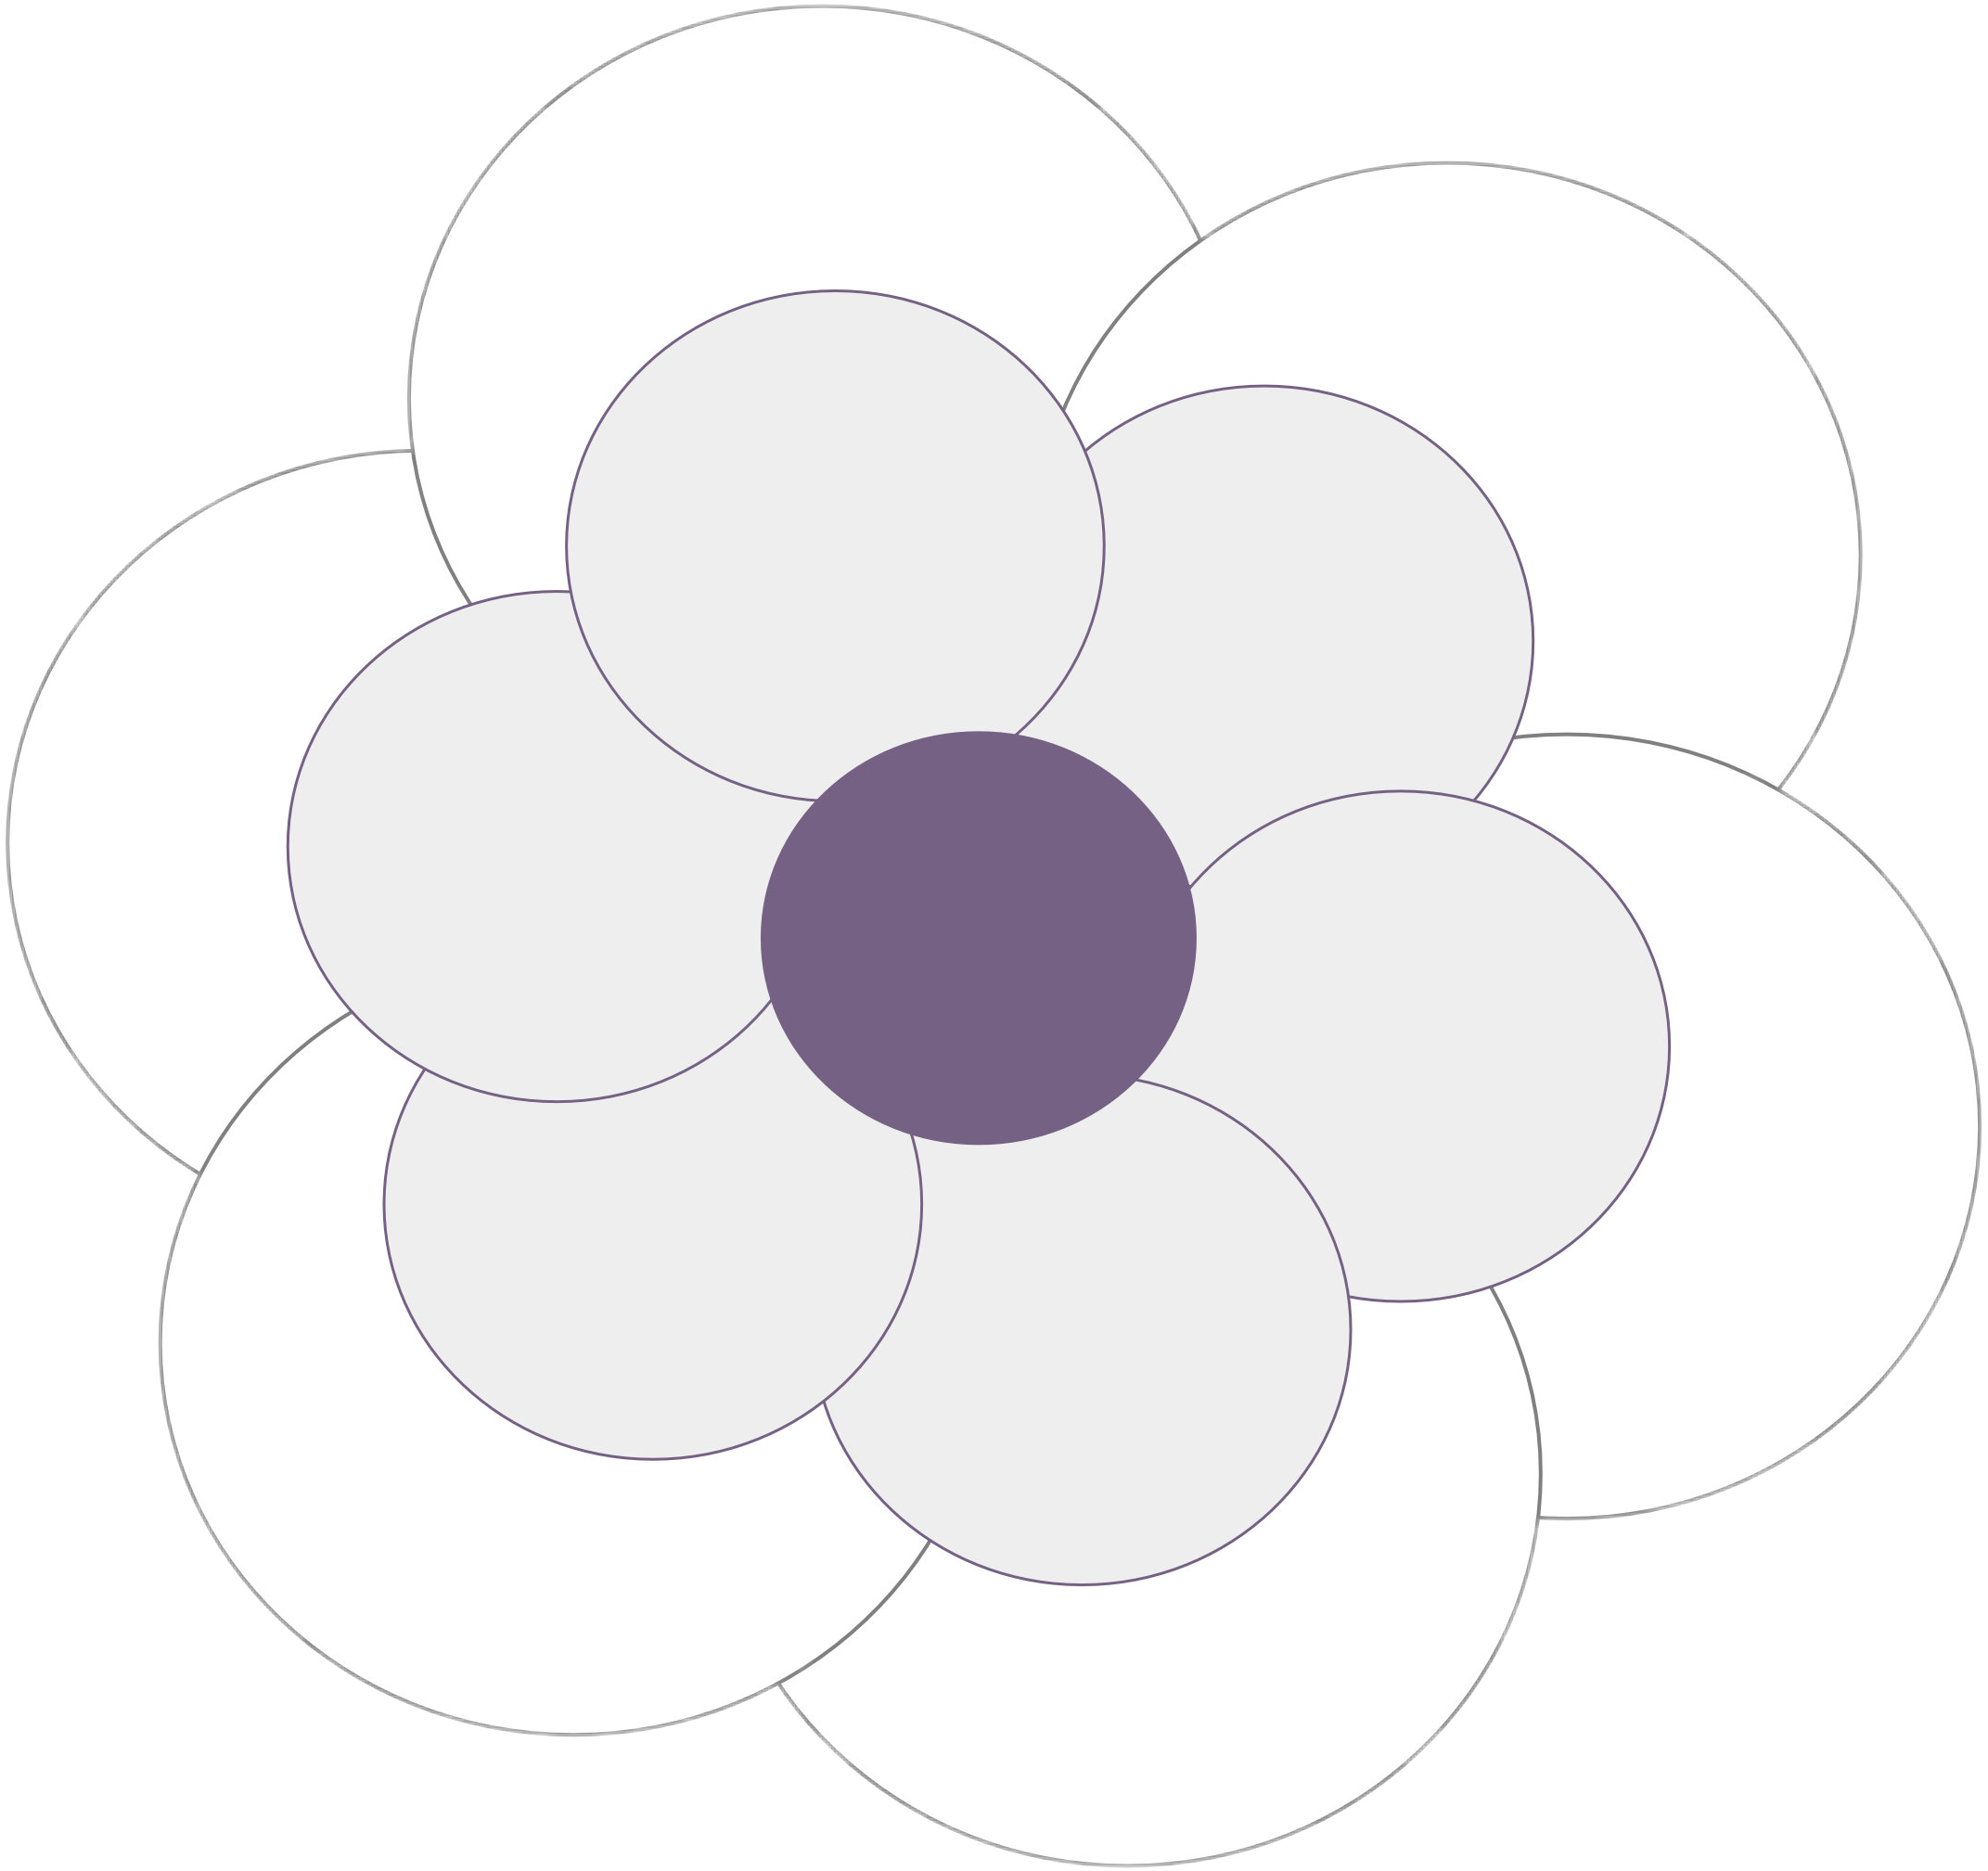 A blank flower tempalte.